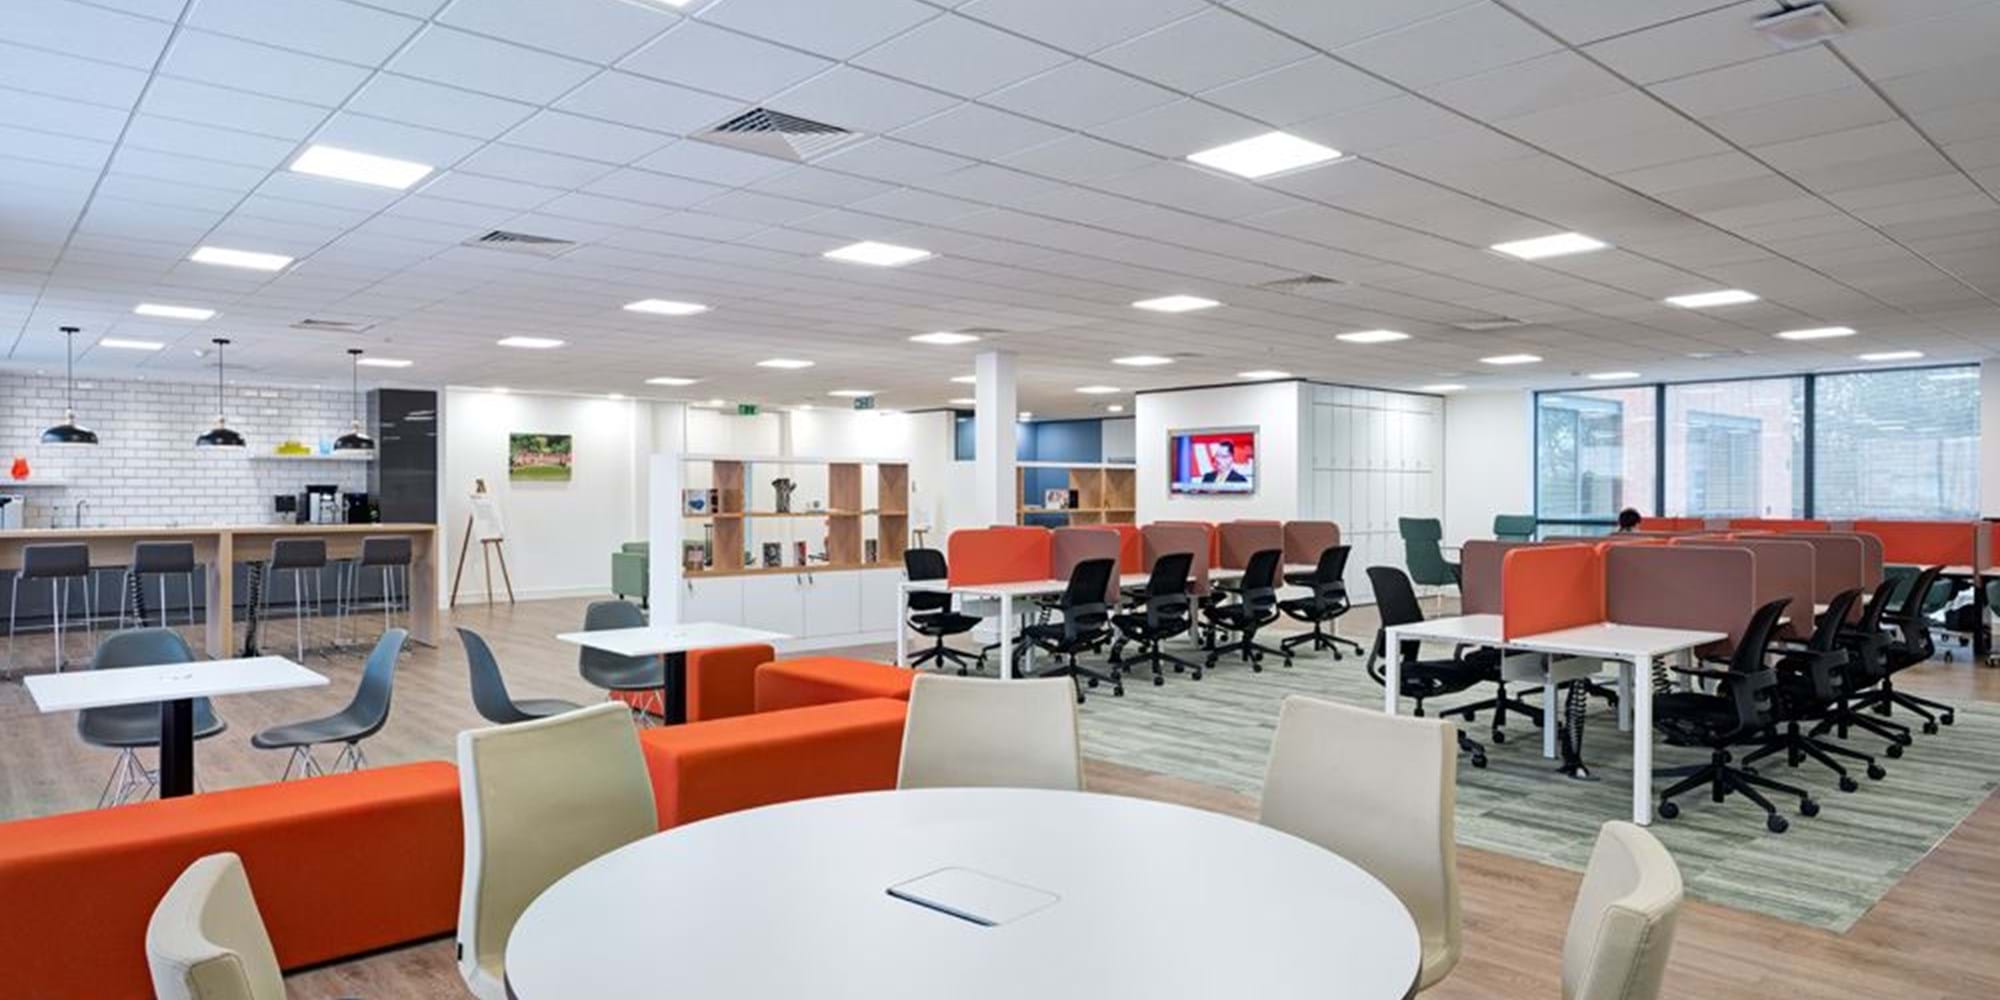 Modus Workspace office design, fit out and refurbishment - Regus Stokenchurch - Regus Gerrads Cross 01 highres sRGB.jpg